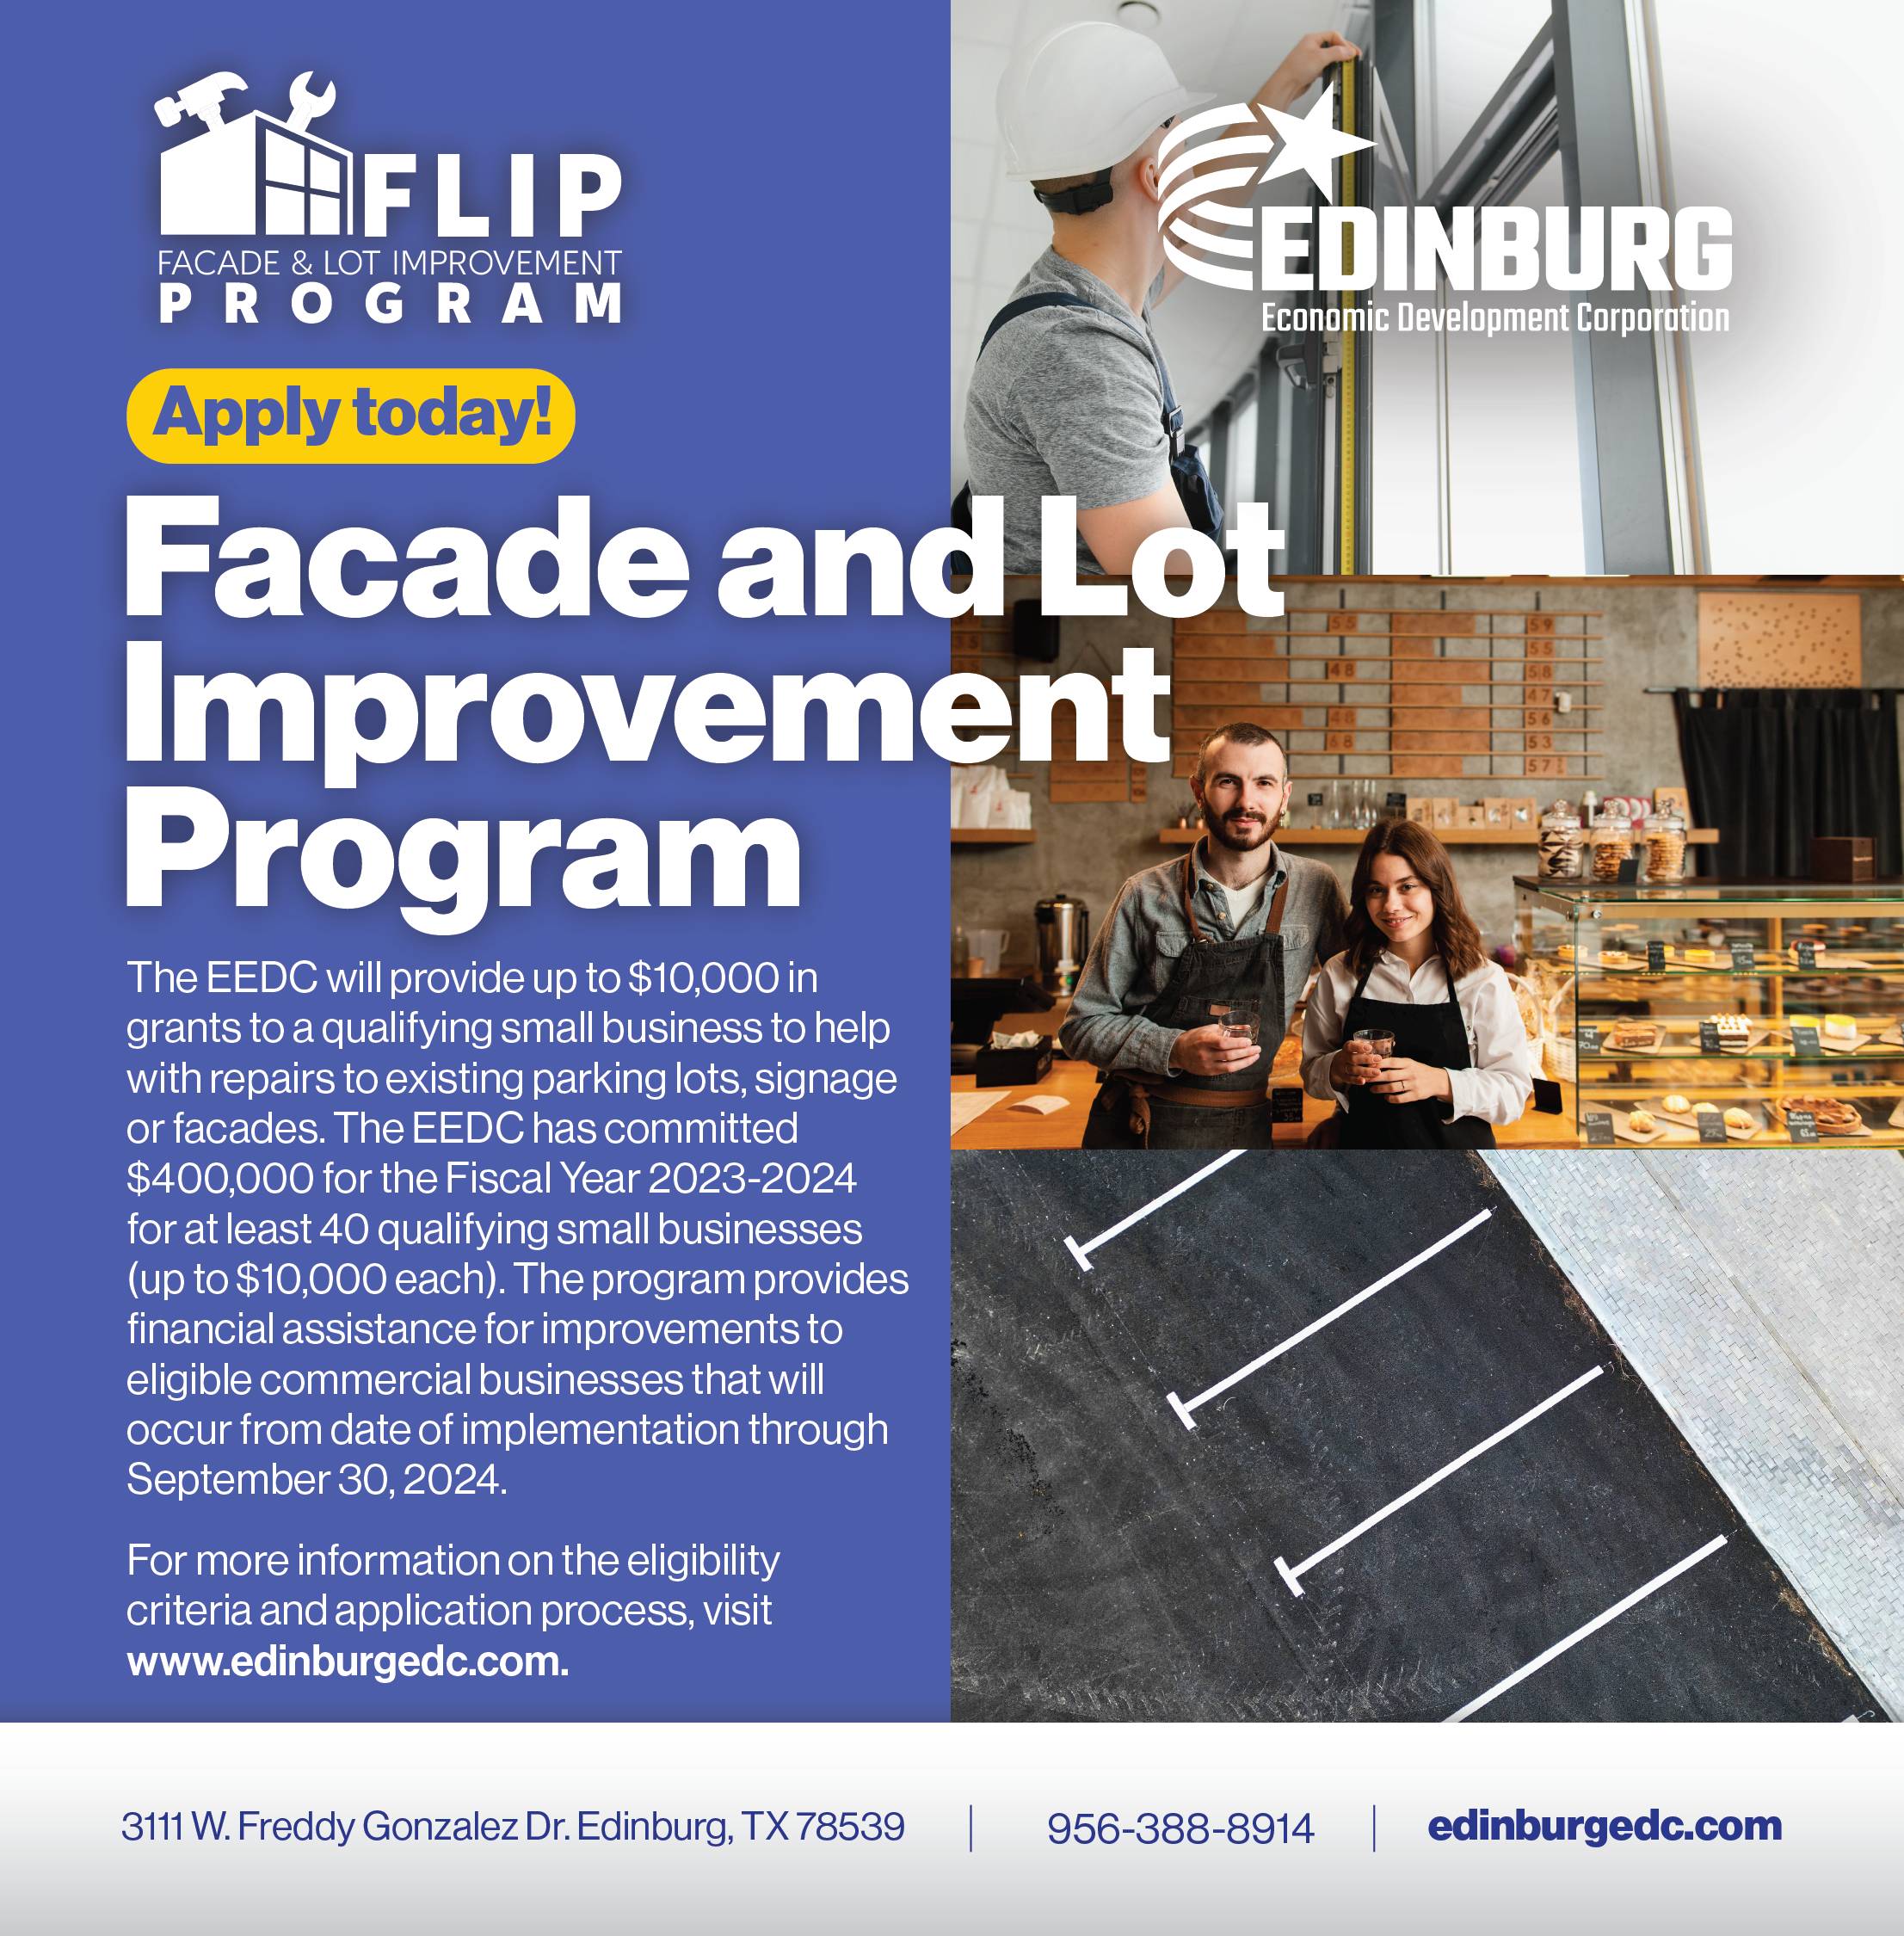 flip program-04 - Copy